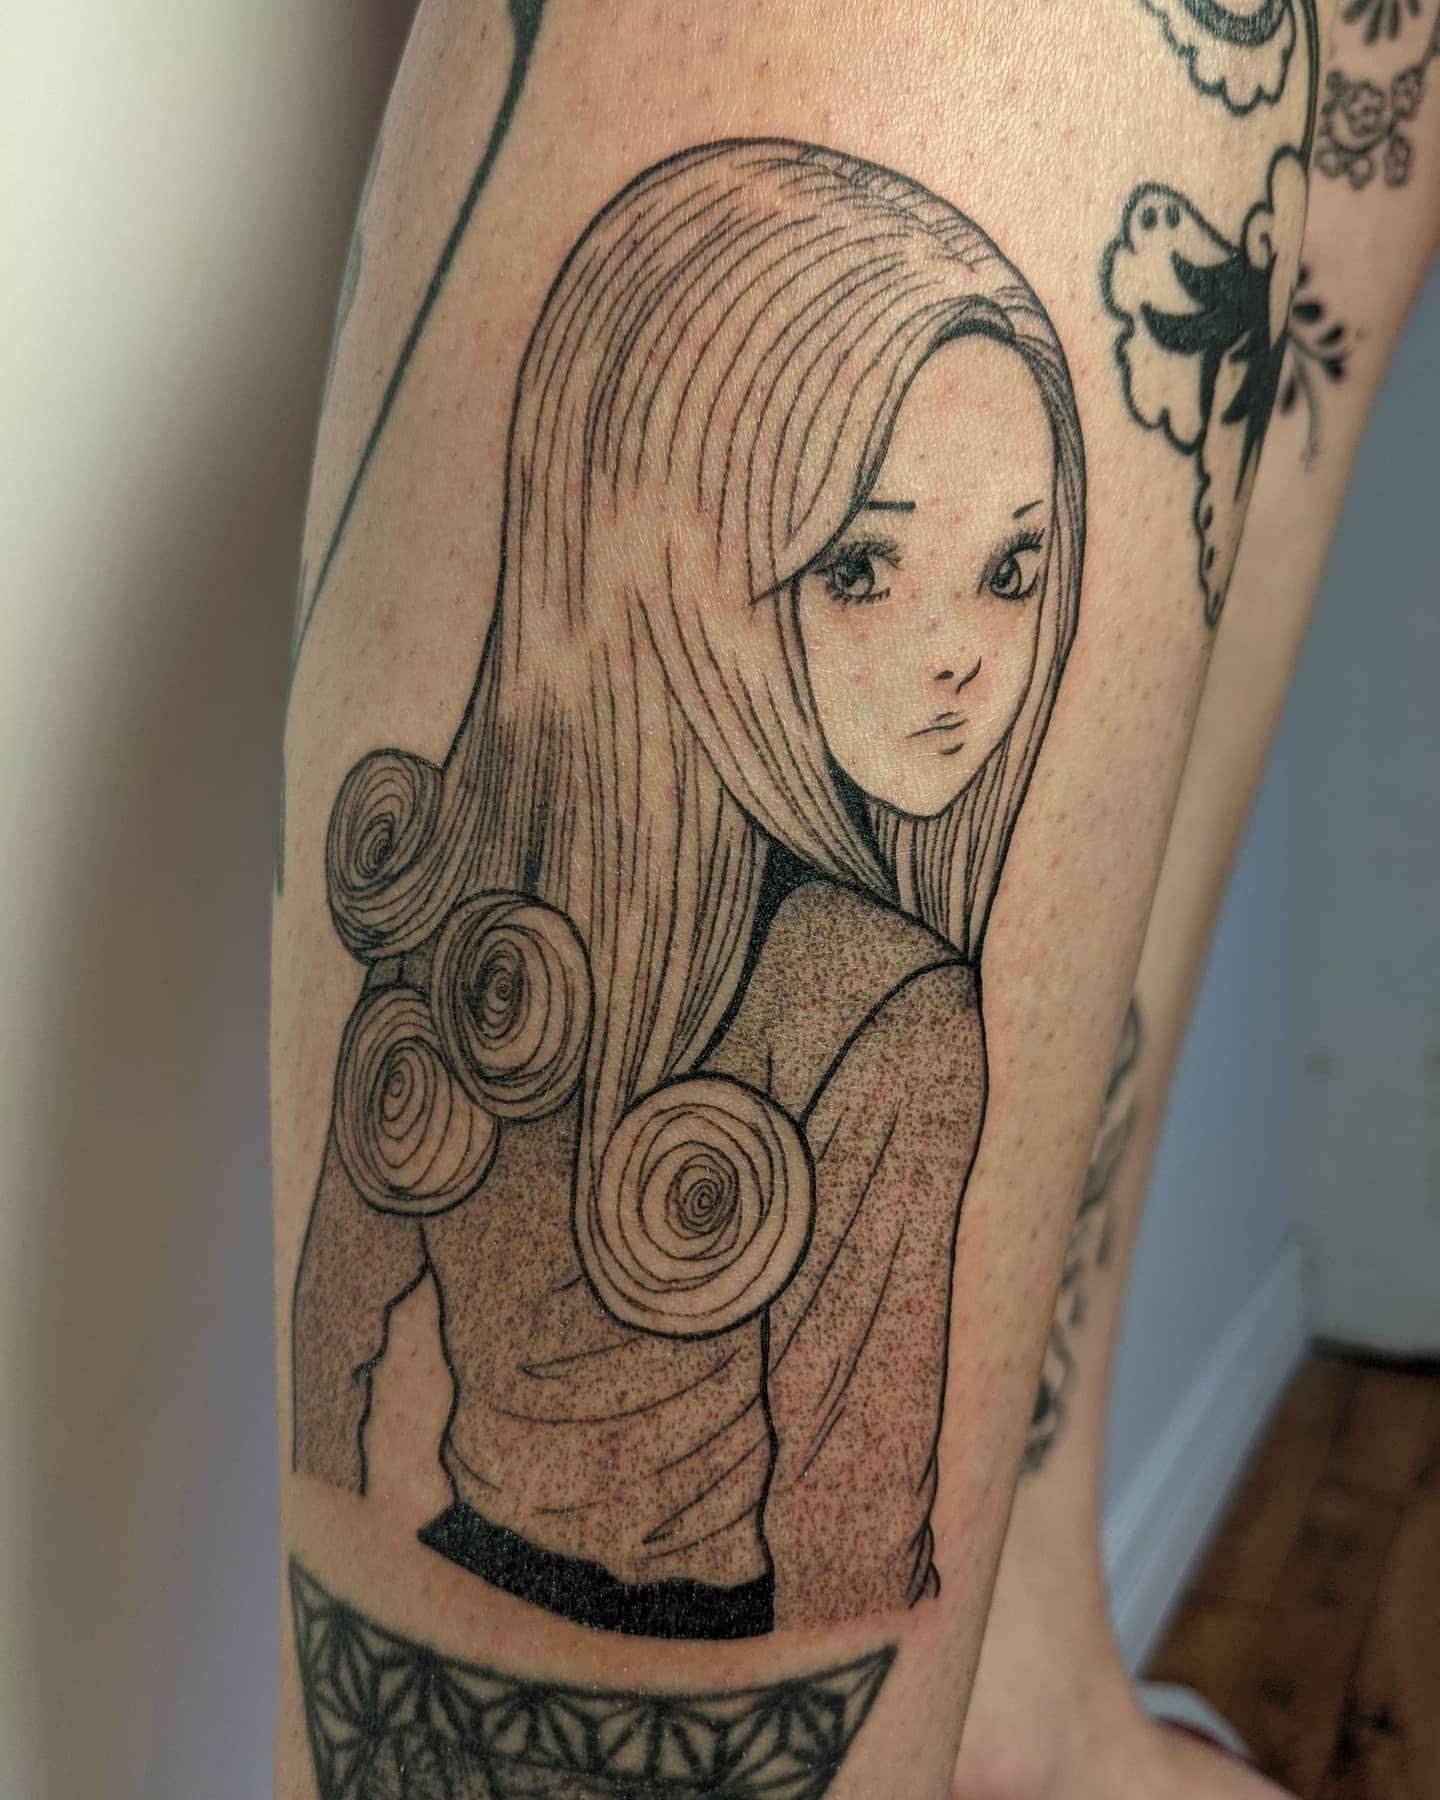 Tatuaje de Junji Ito Uzumaki - nidrawttt